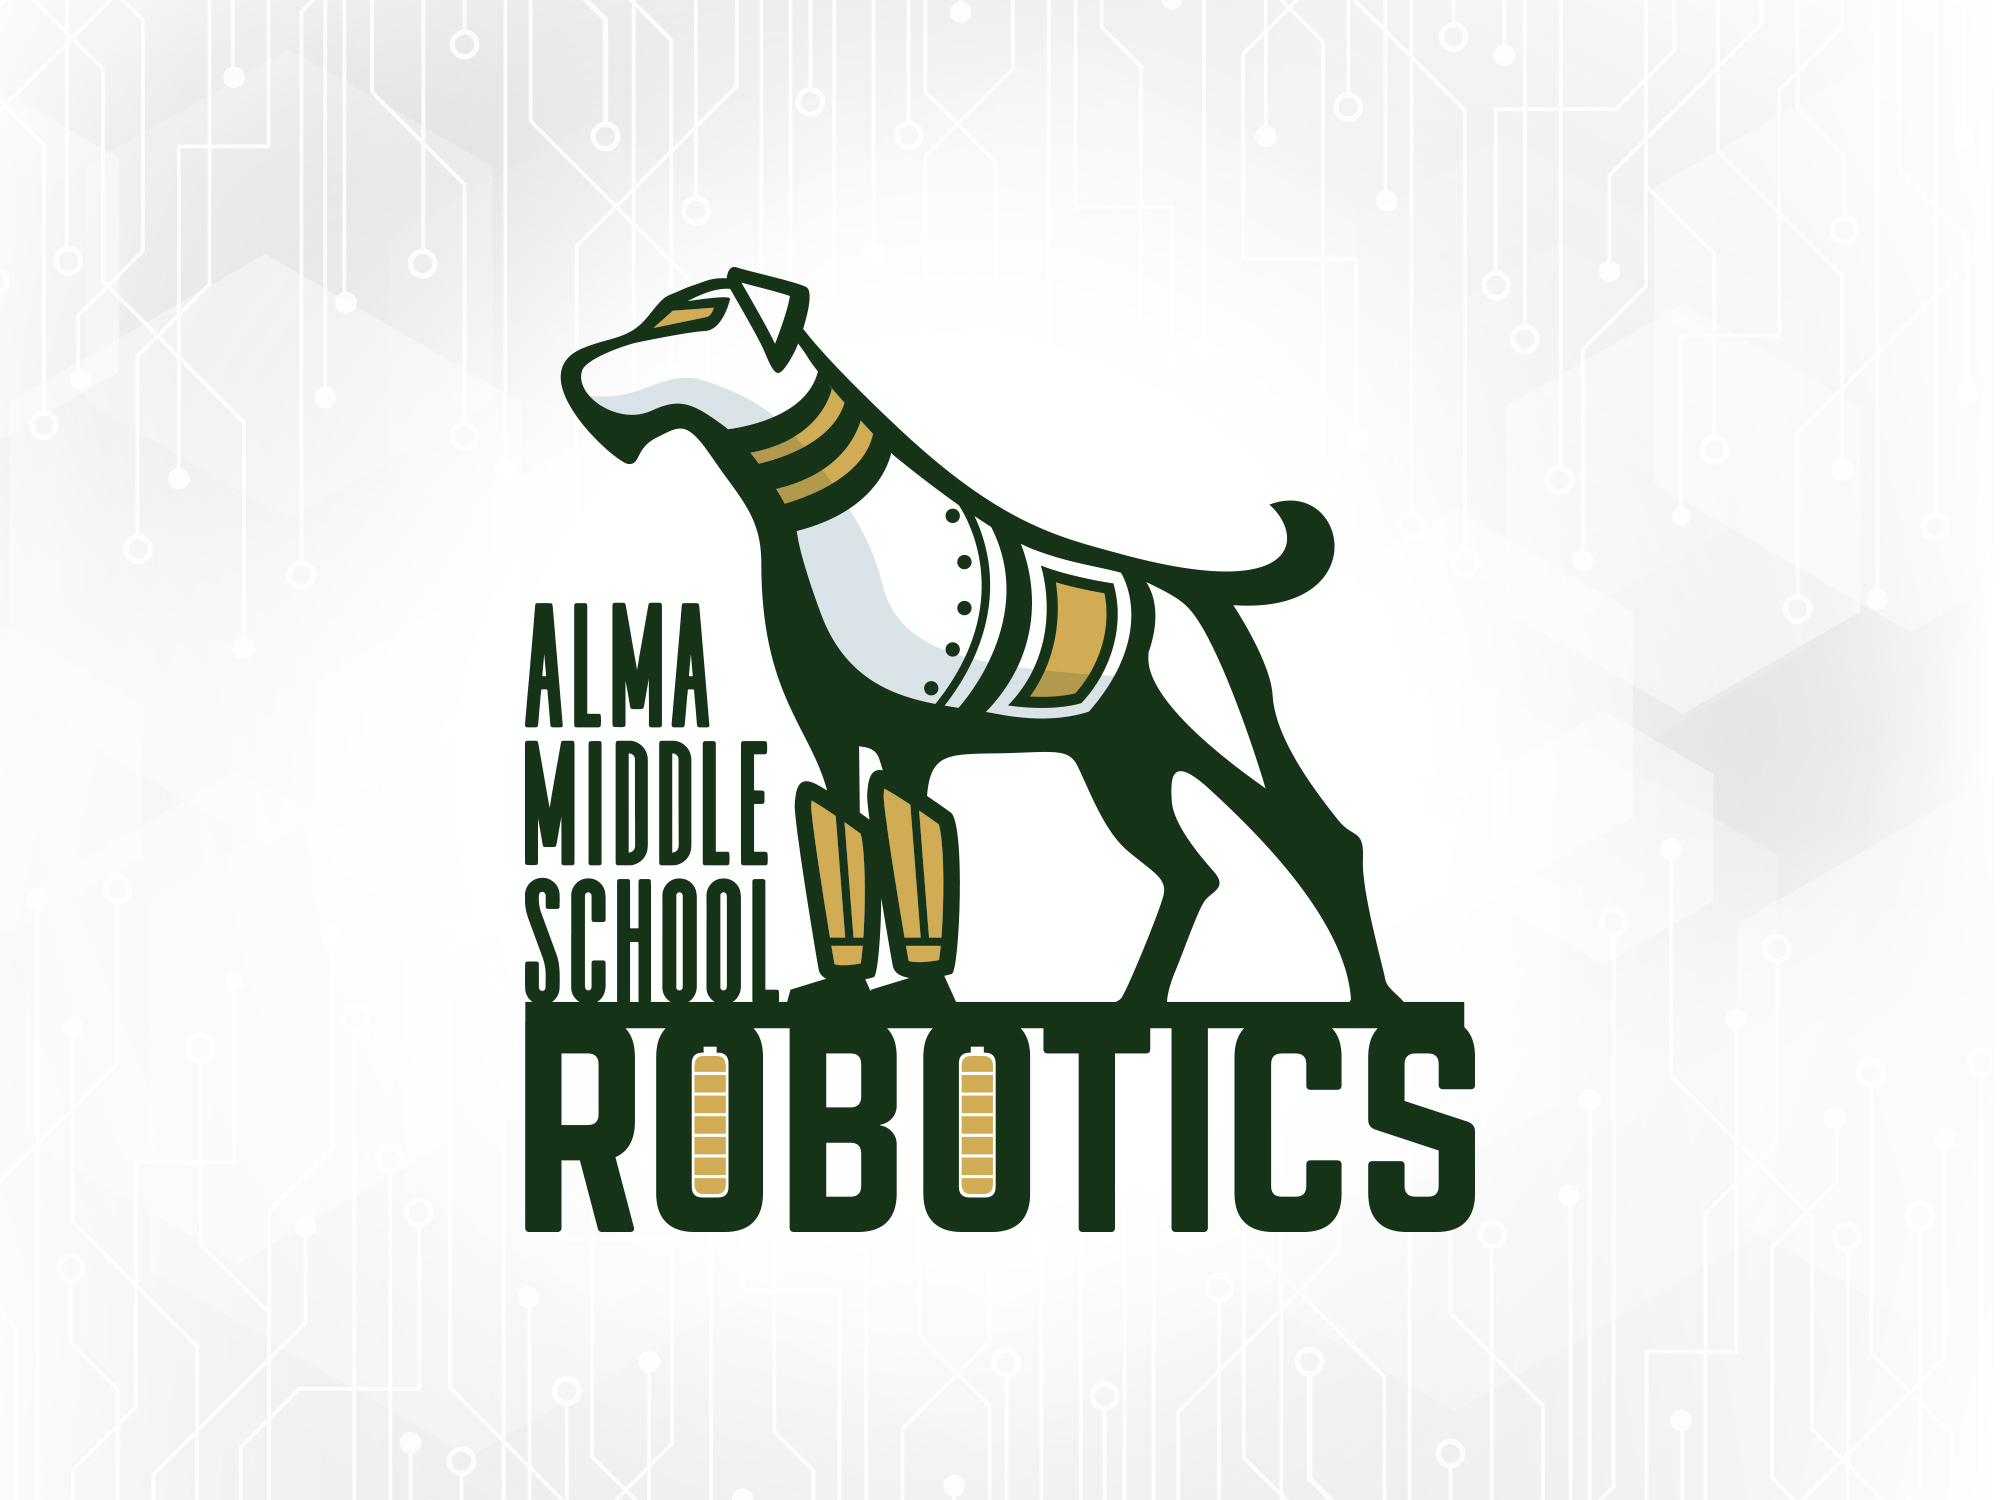 Alma Middle School Robotics